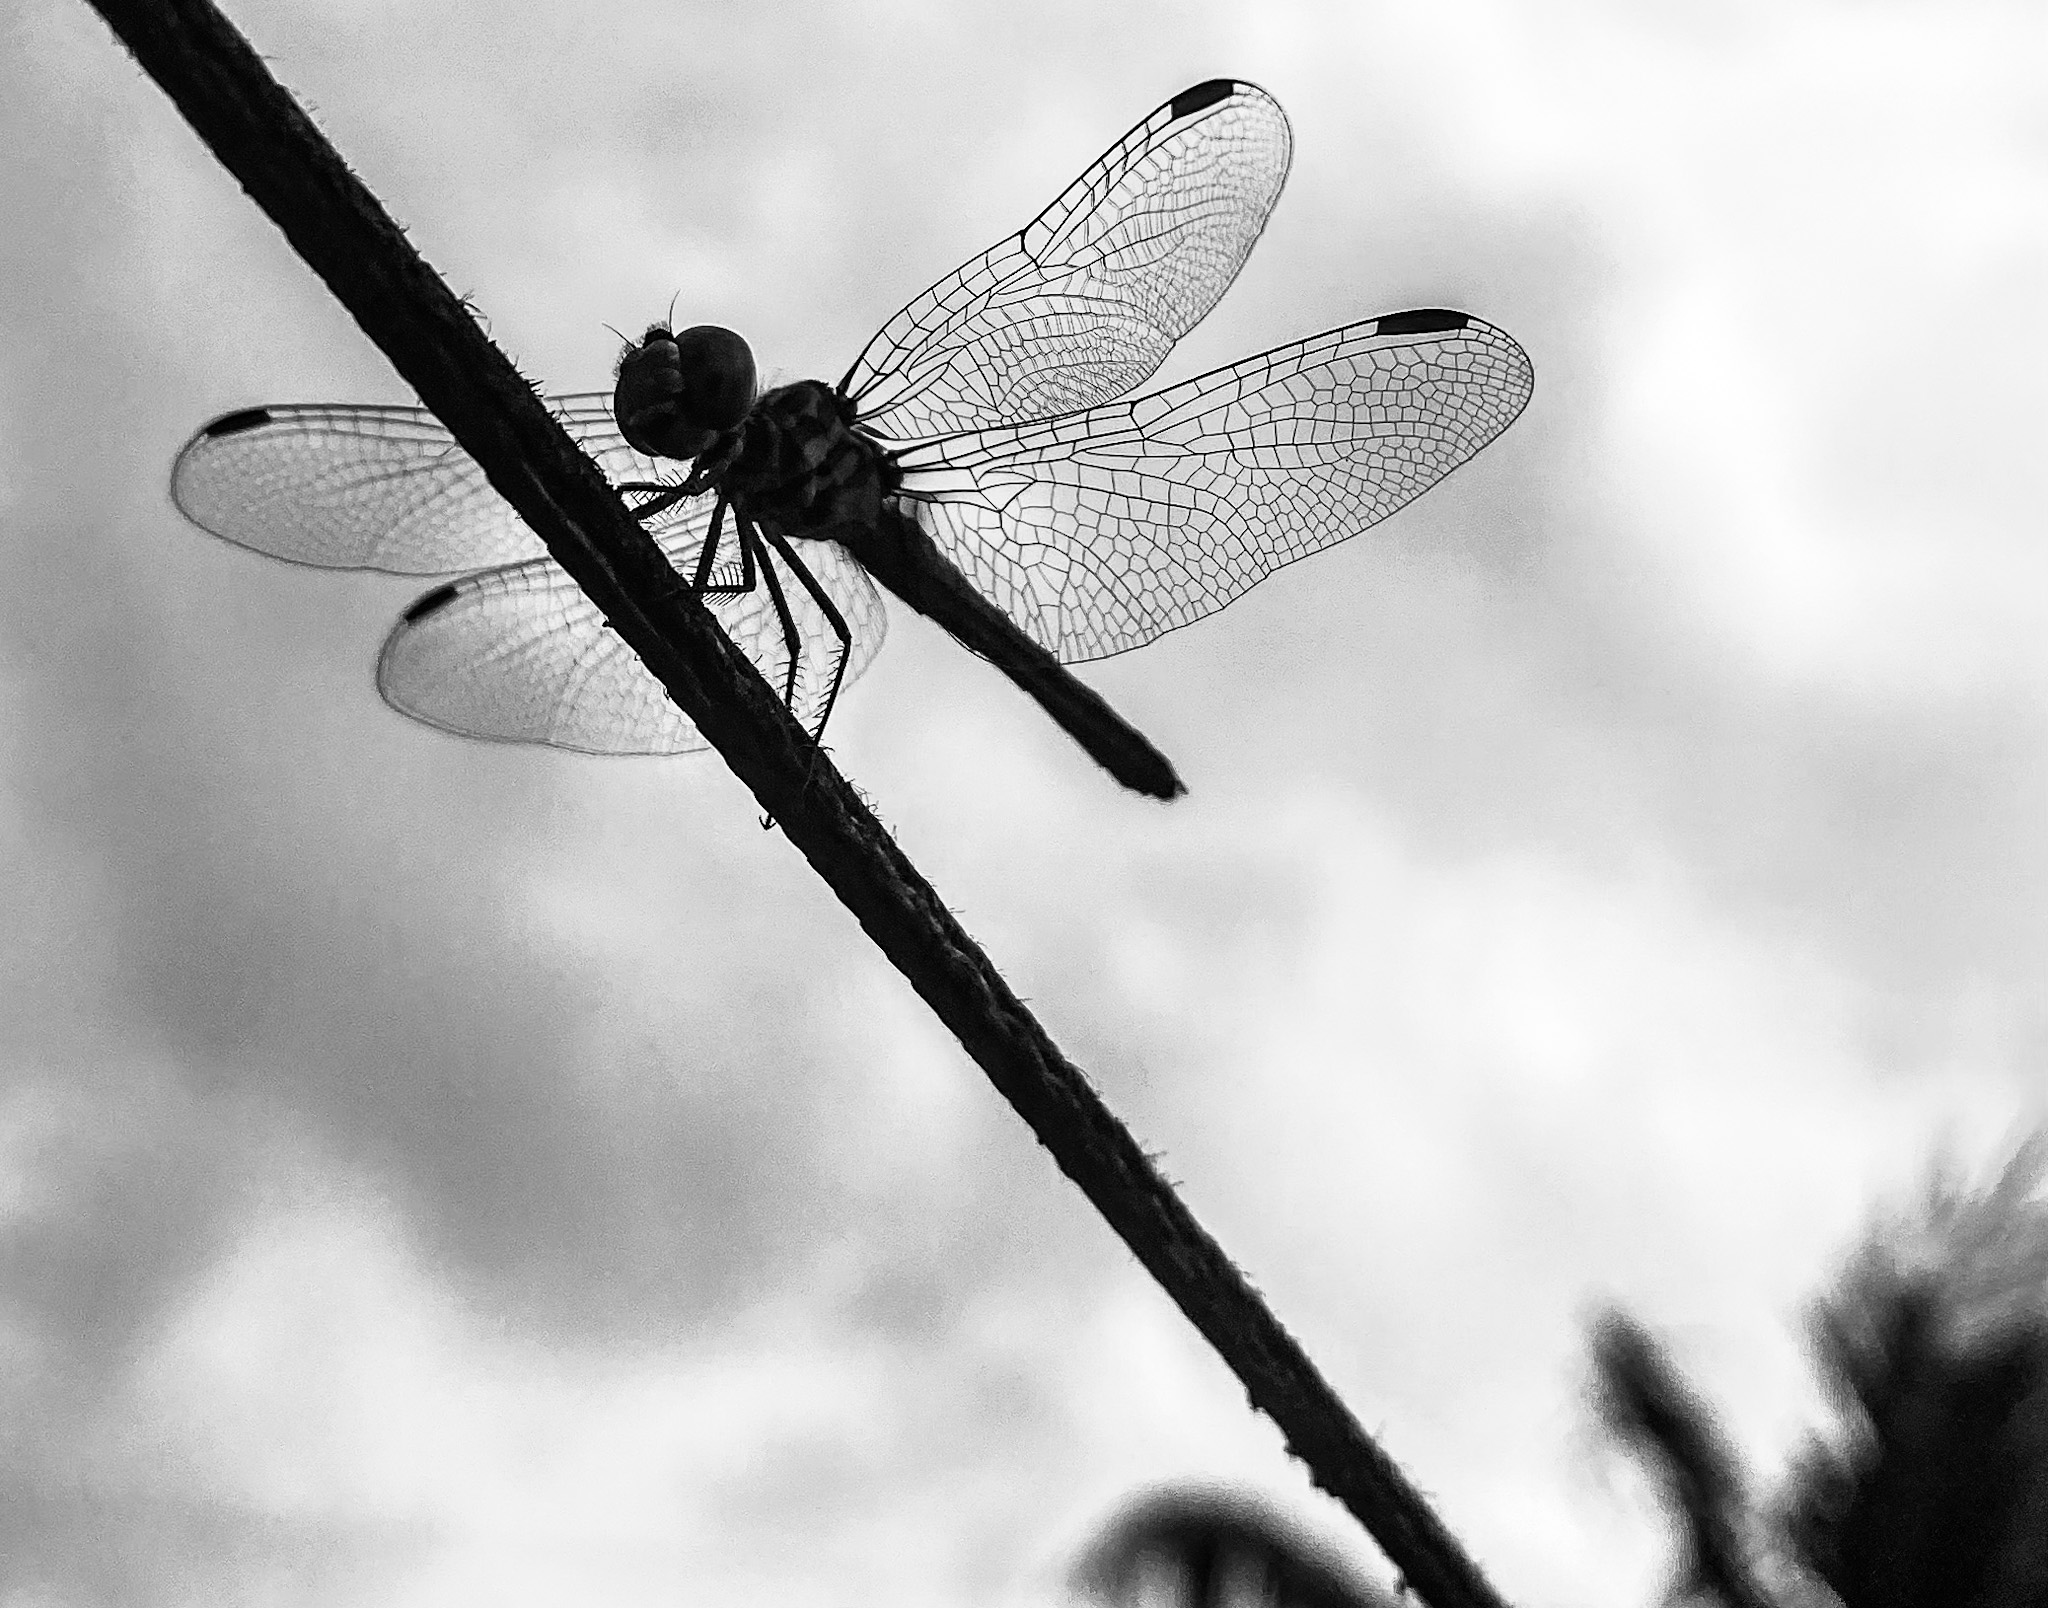 Dragonfly in Black & White